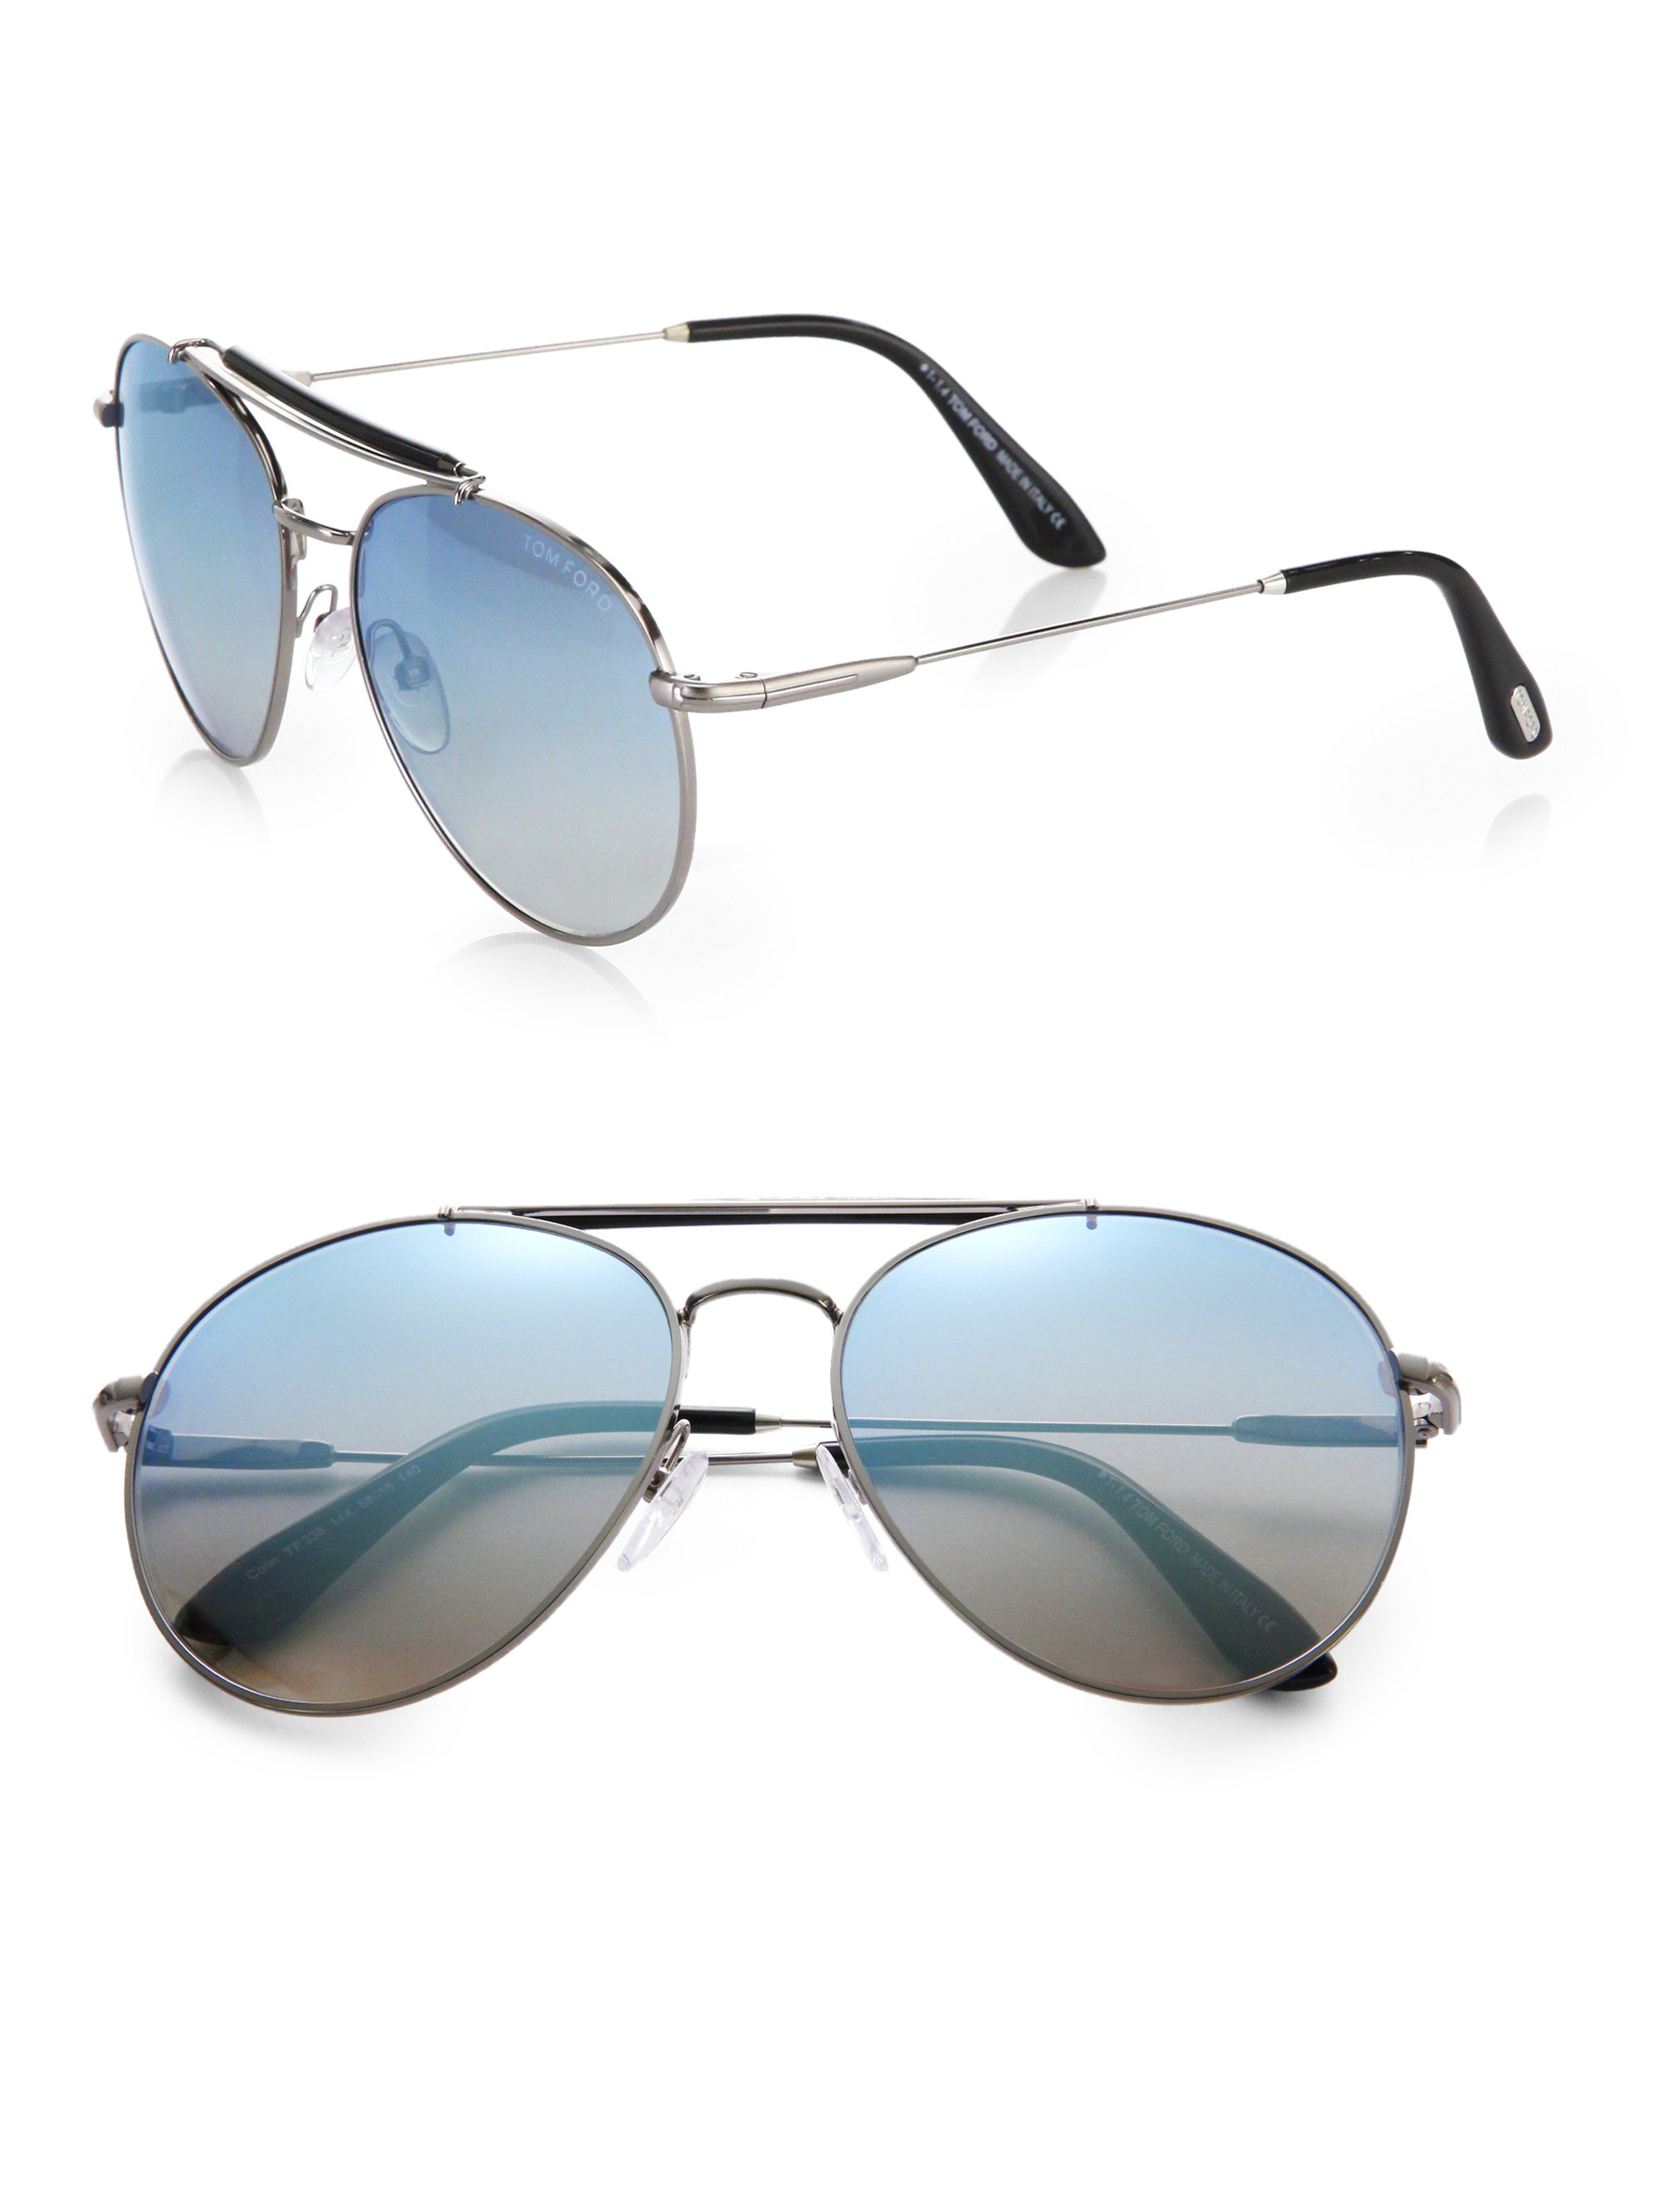 Lyst - Tom Ford Colin Round Aviator Sunglasses in Metallic